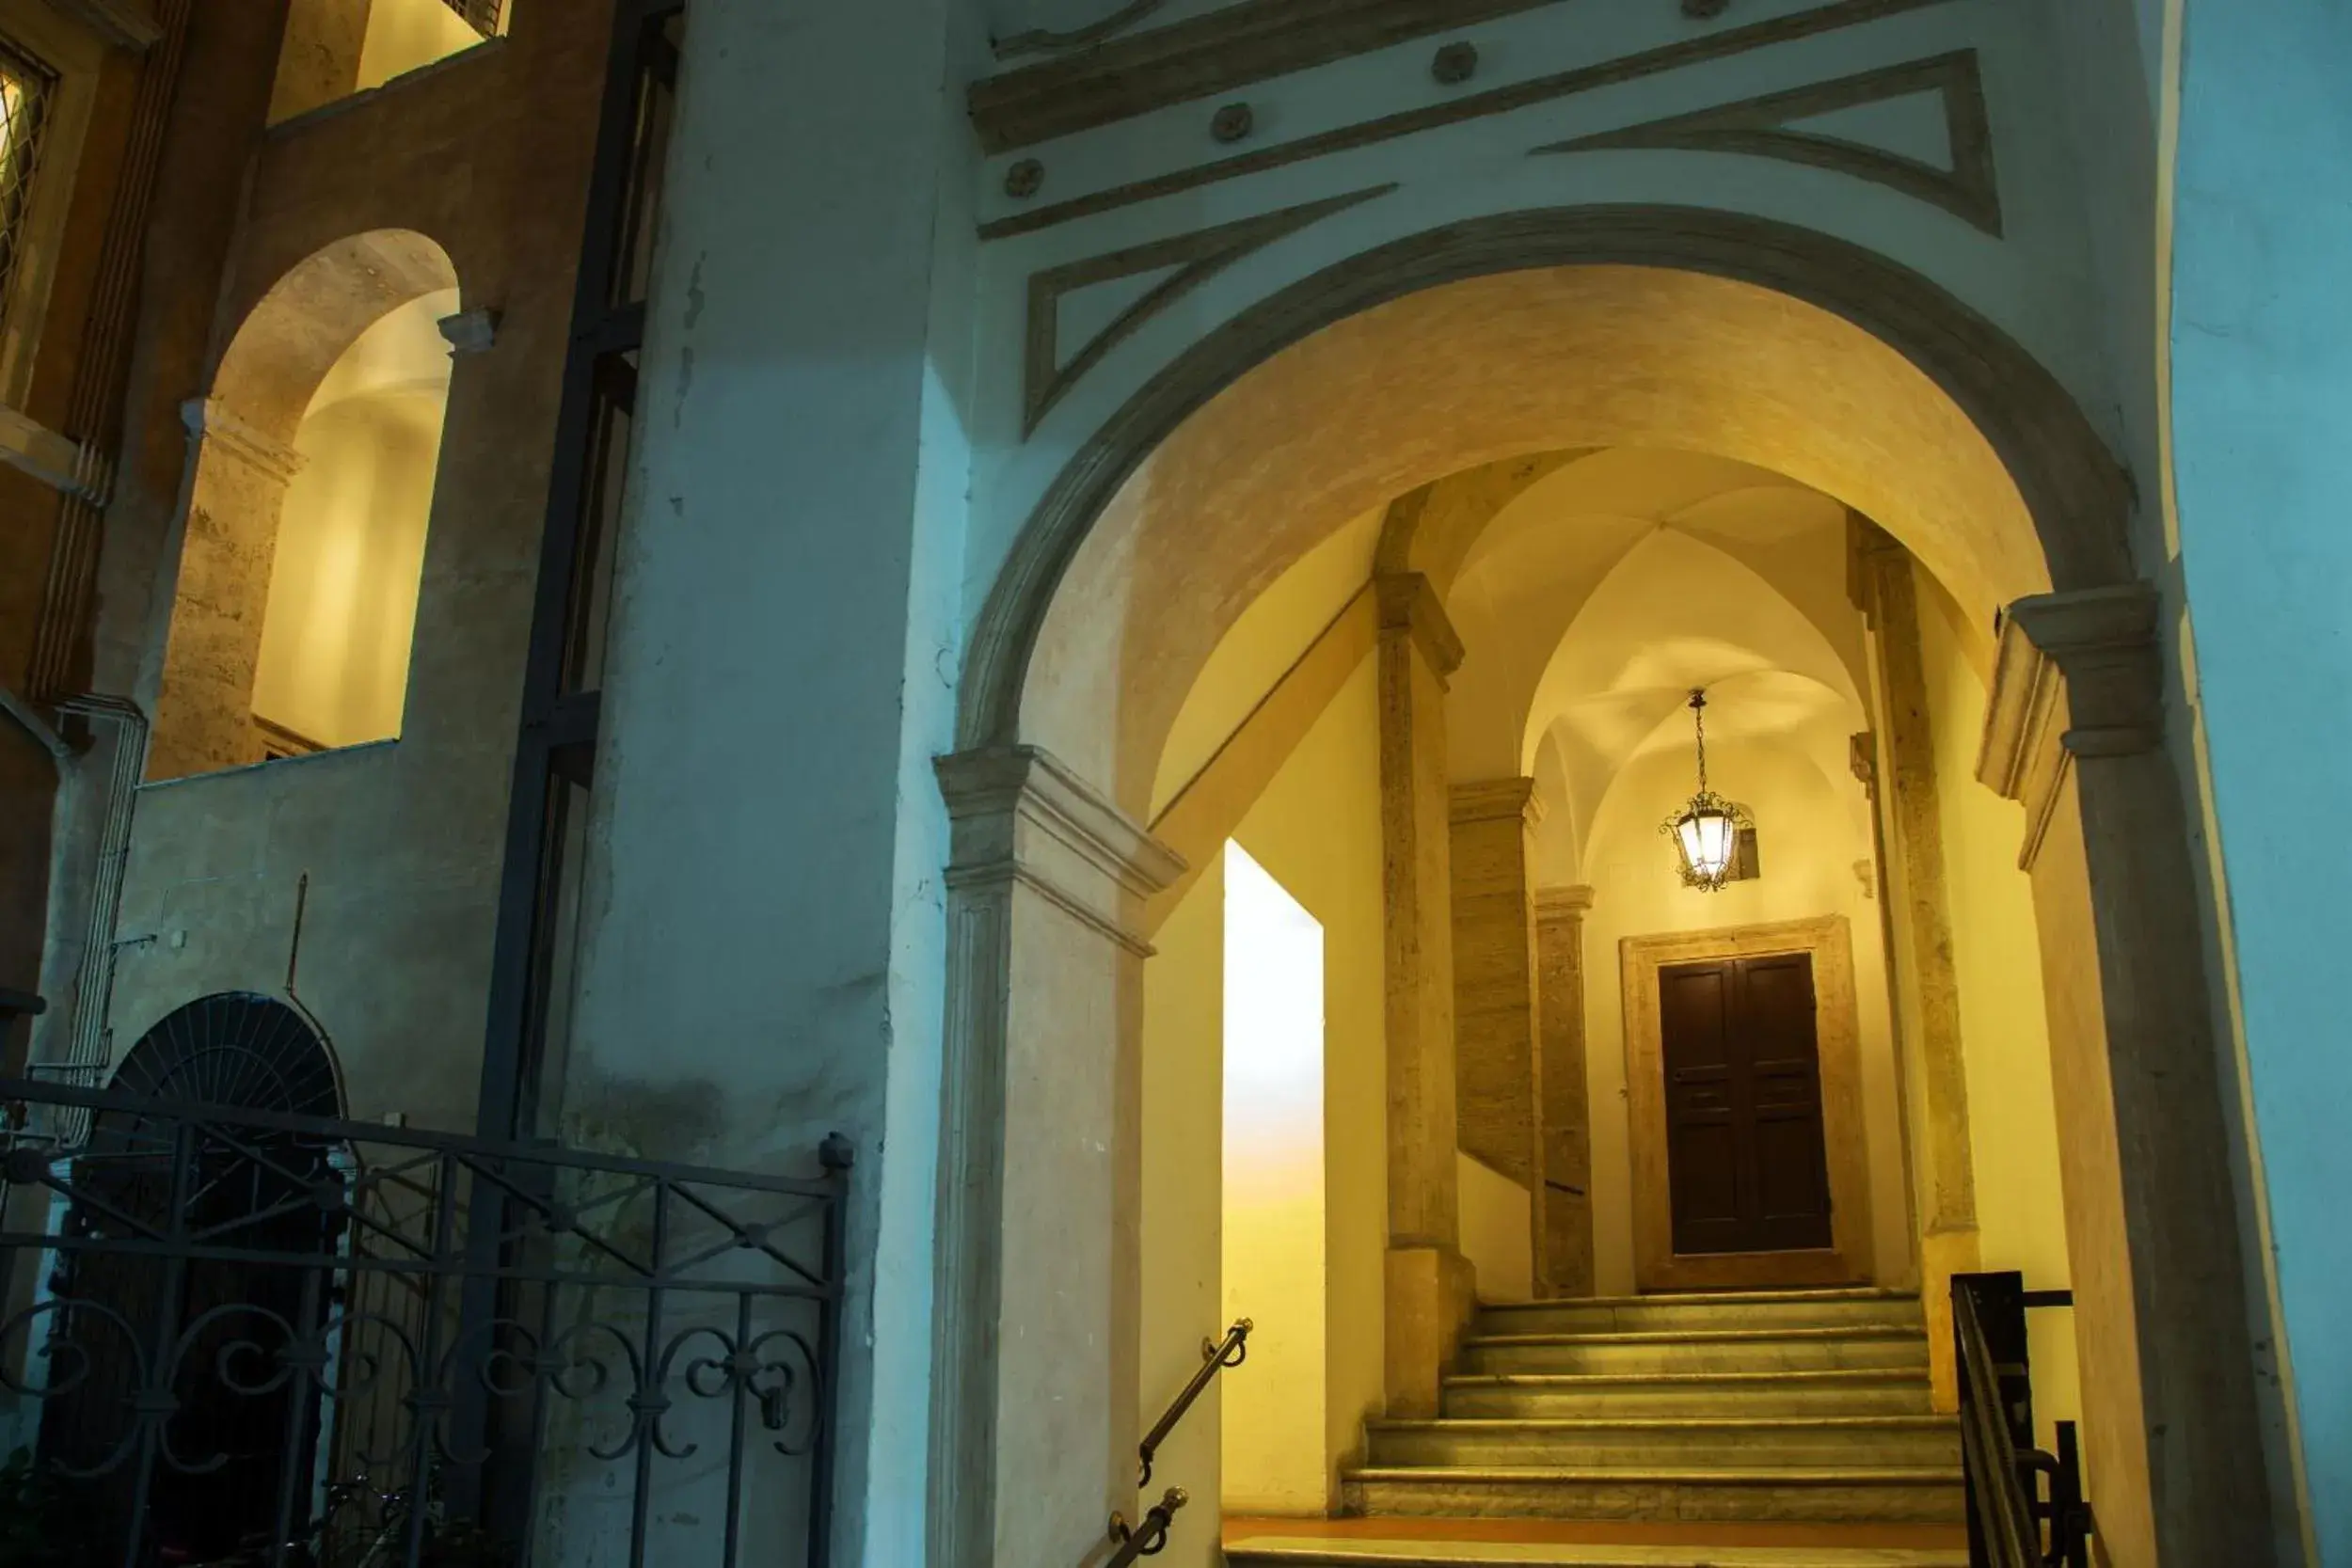 Facade/entrance in Palazzo De Cupis - Suites and View